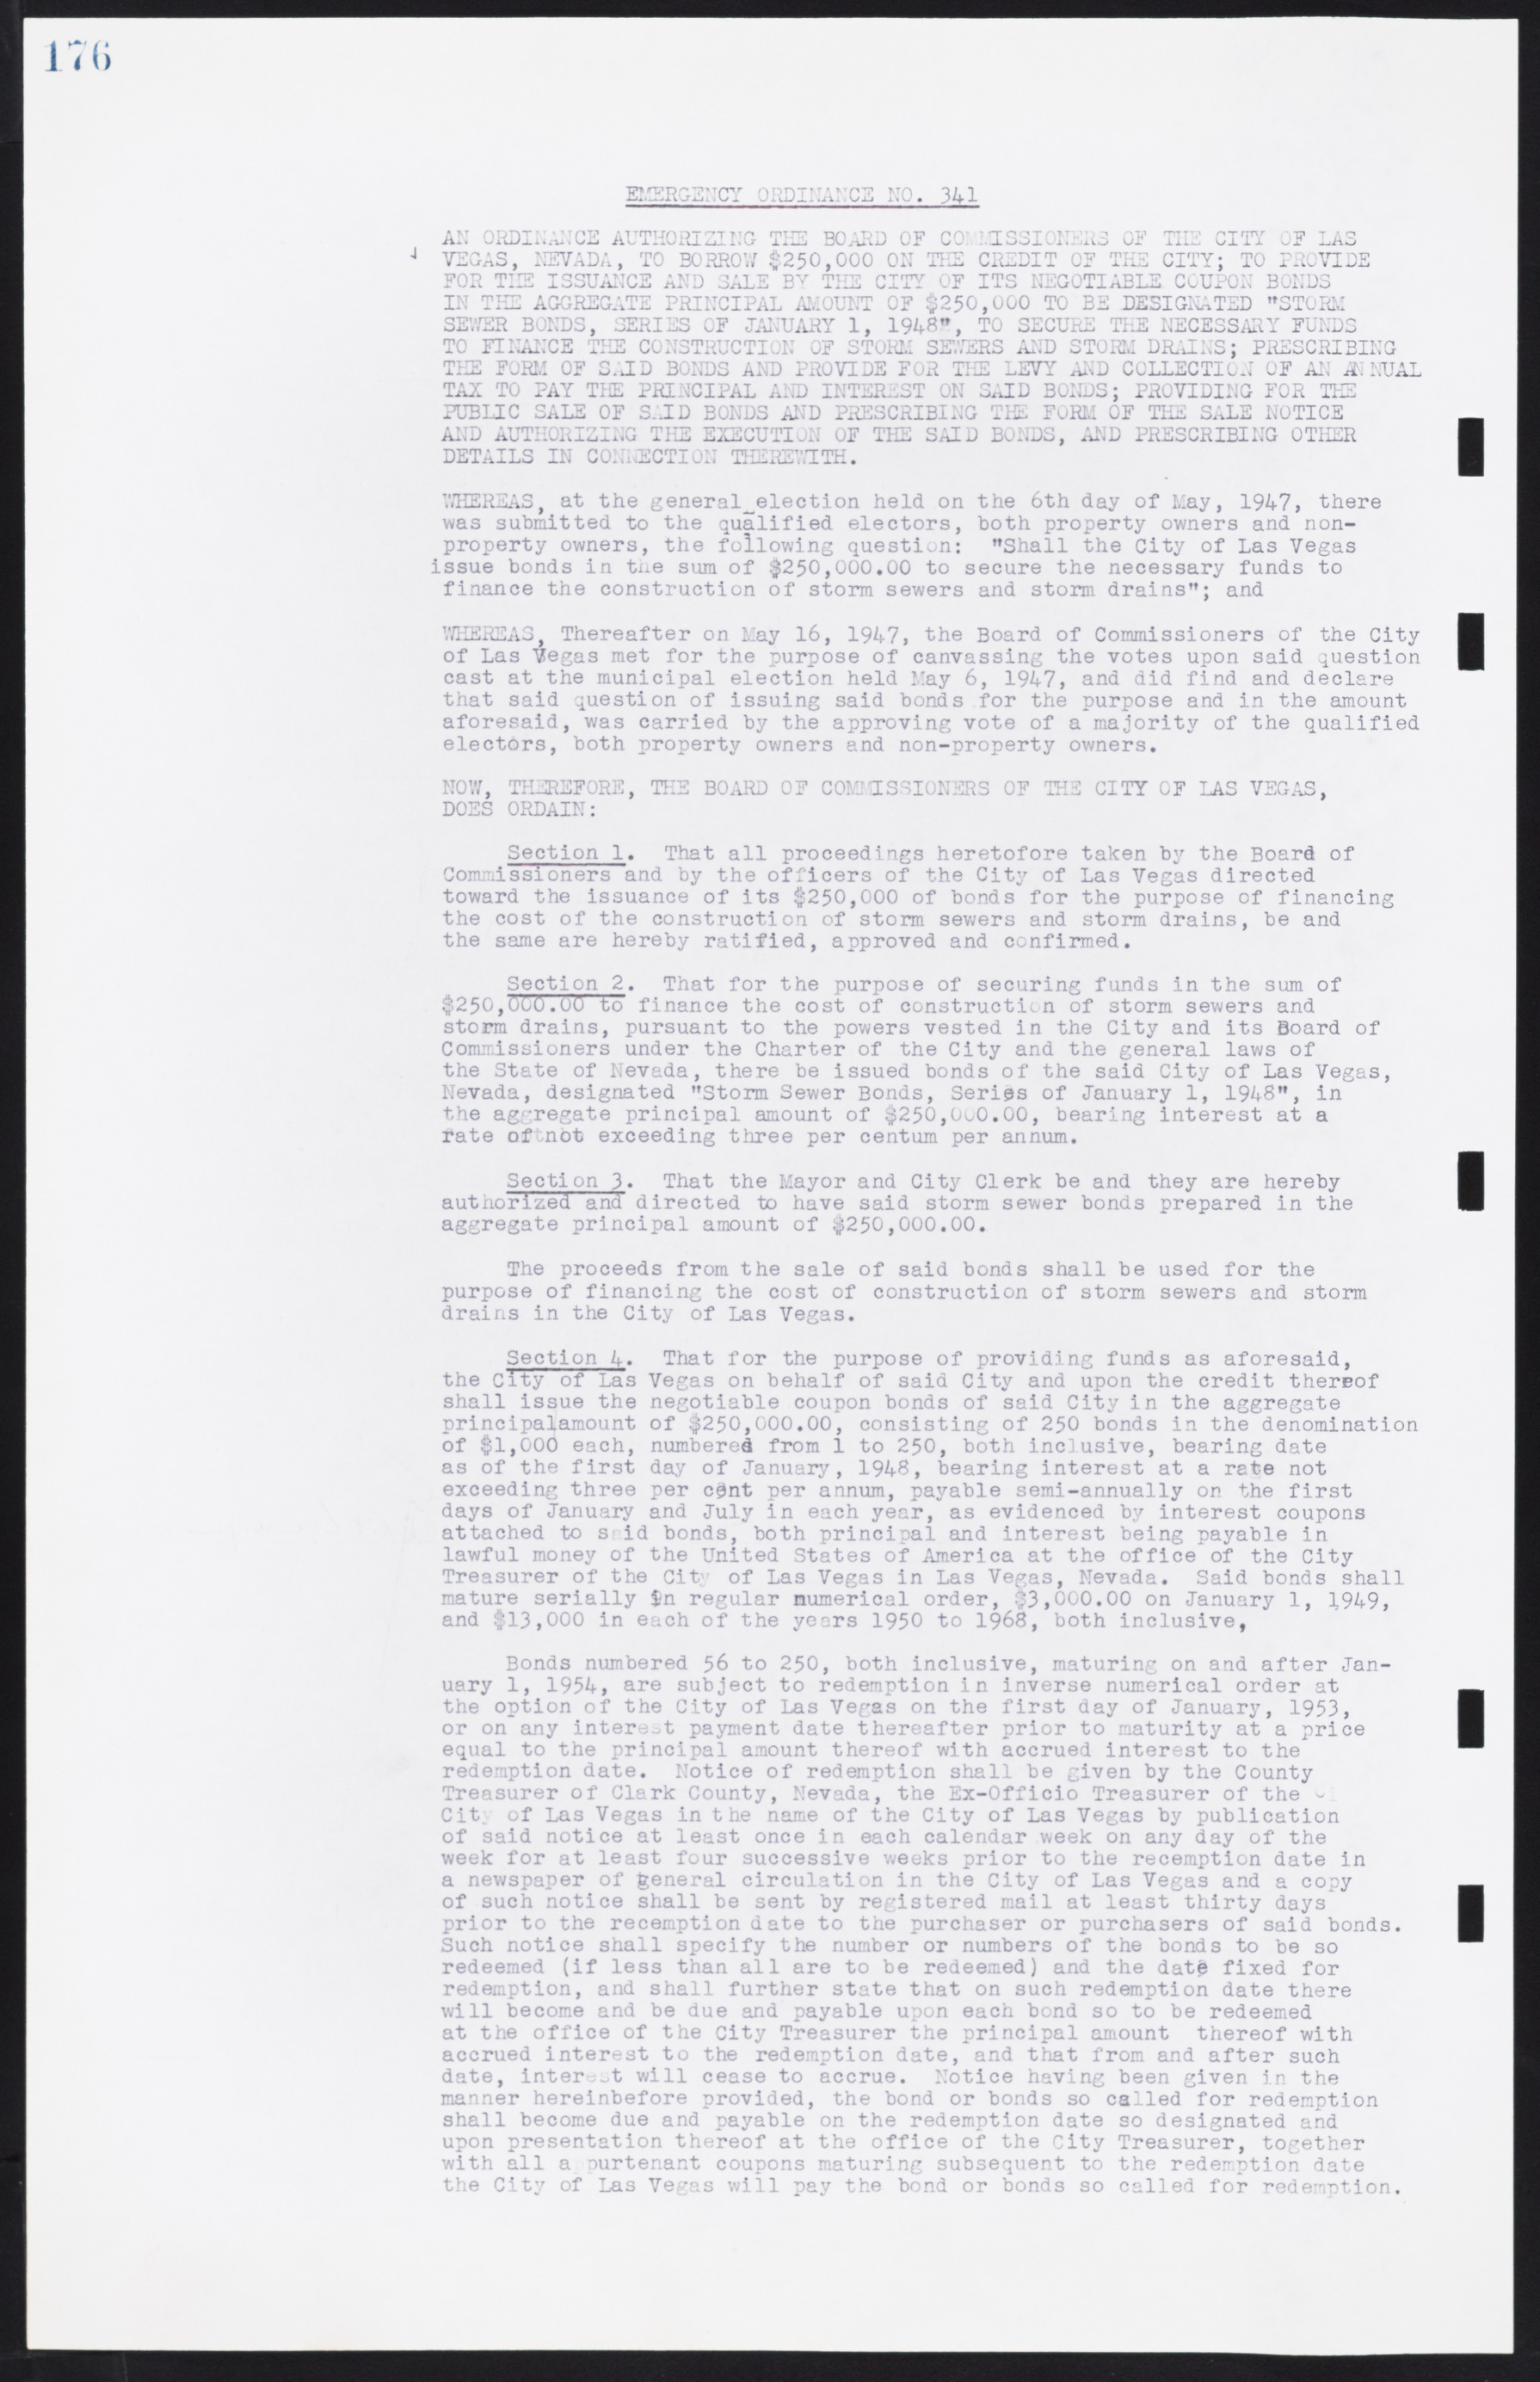 Las Vegas City Commission Minutes, January 7, 1947 to October 26, 1949, lvc000006-196